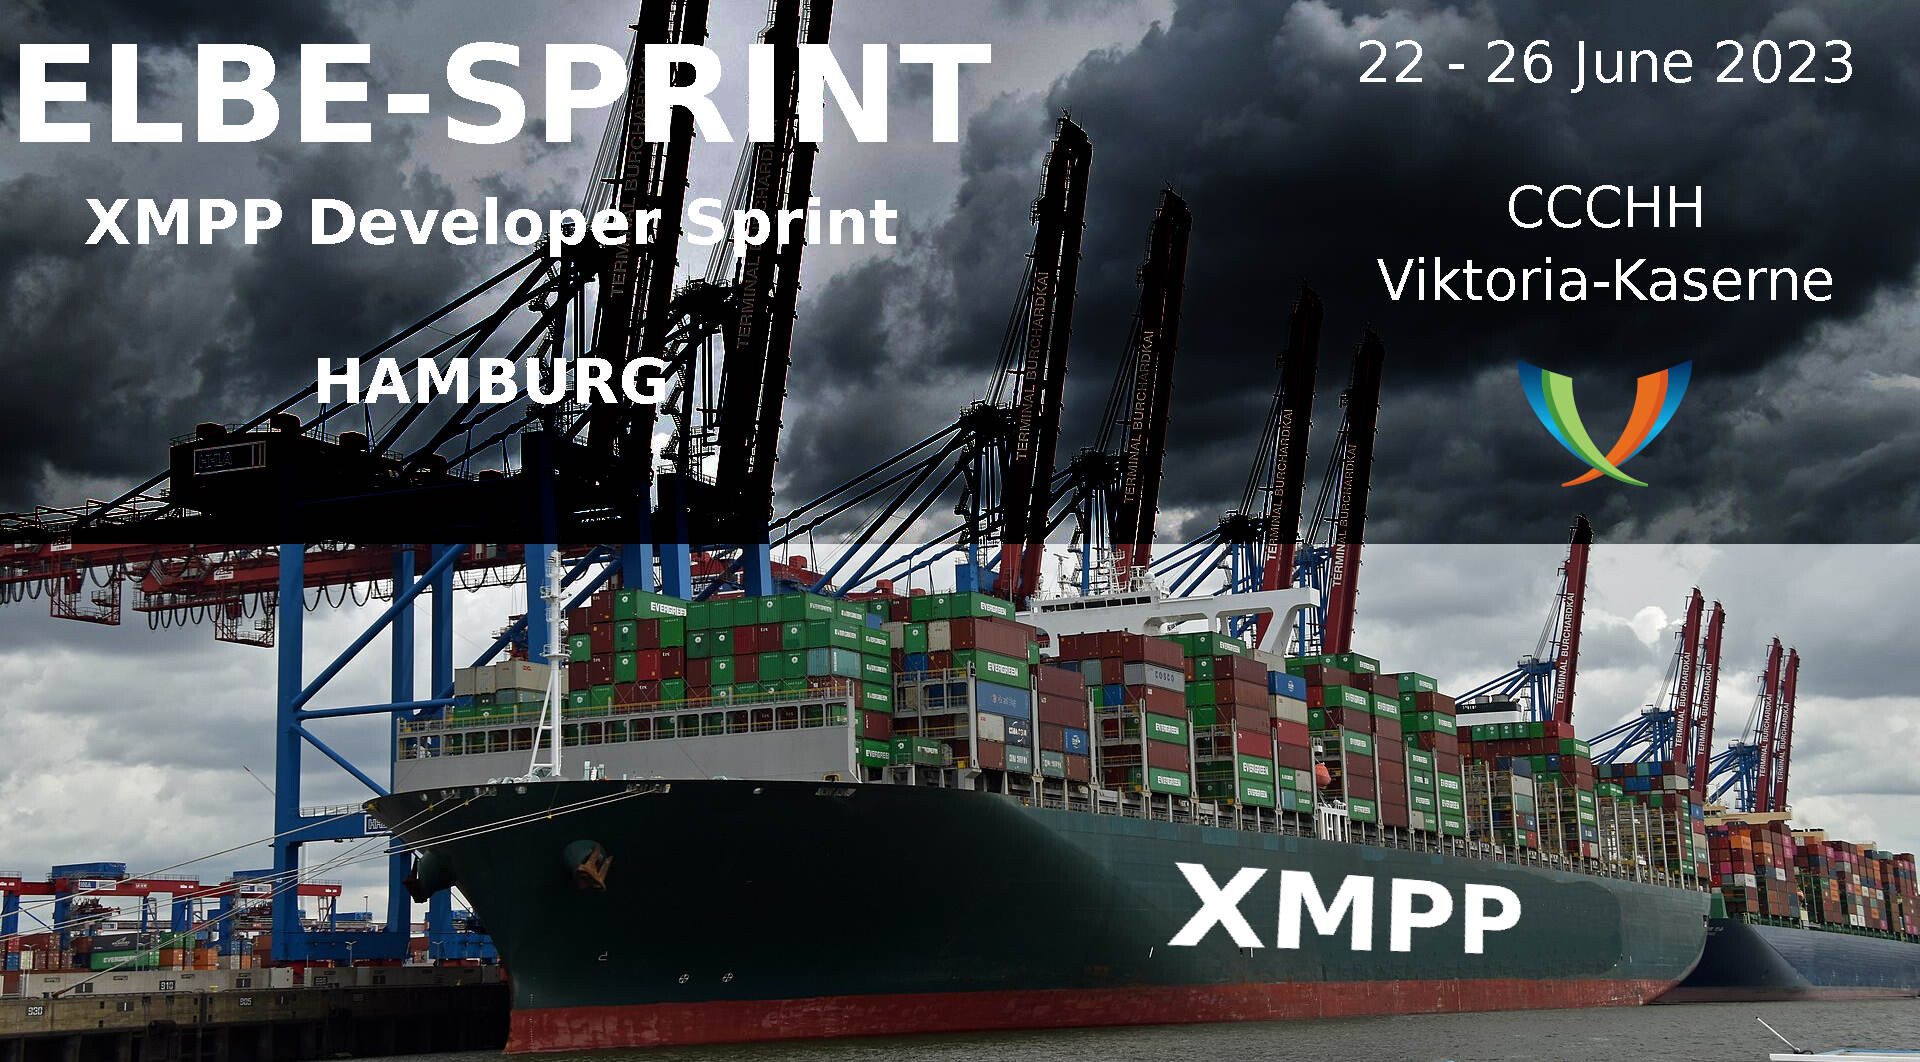 Elbe-Sprint XMPP Developer Sprint Promo Image